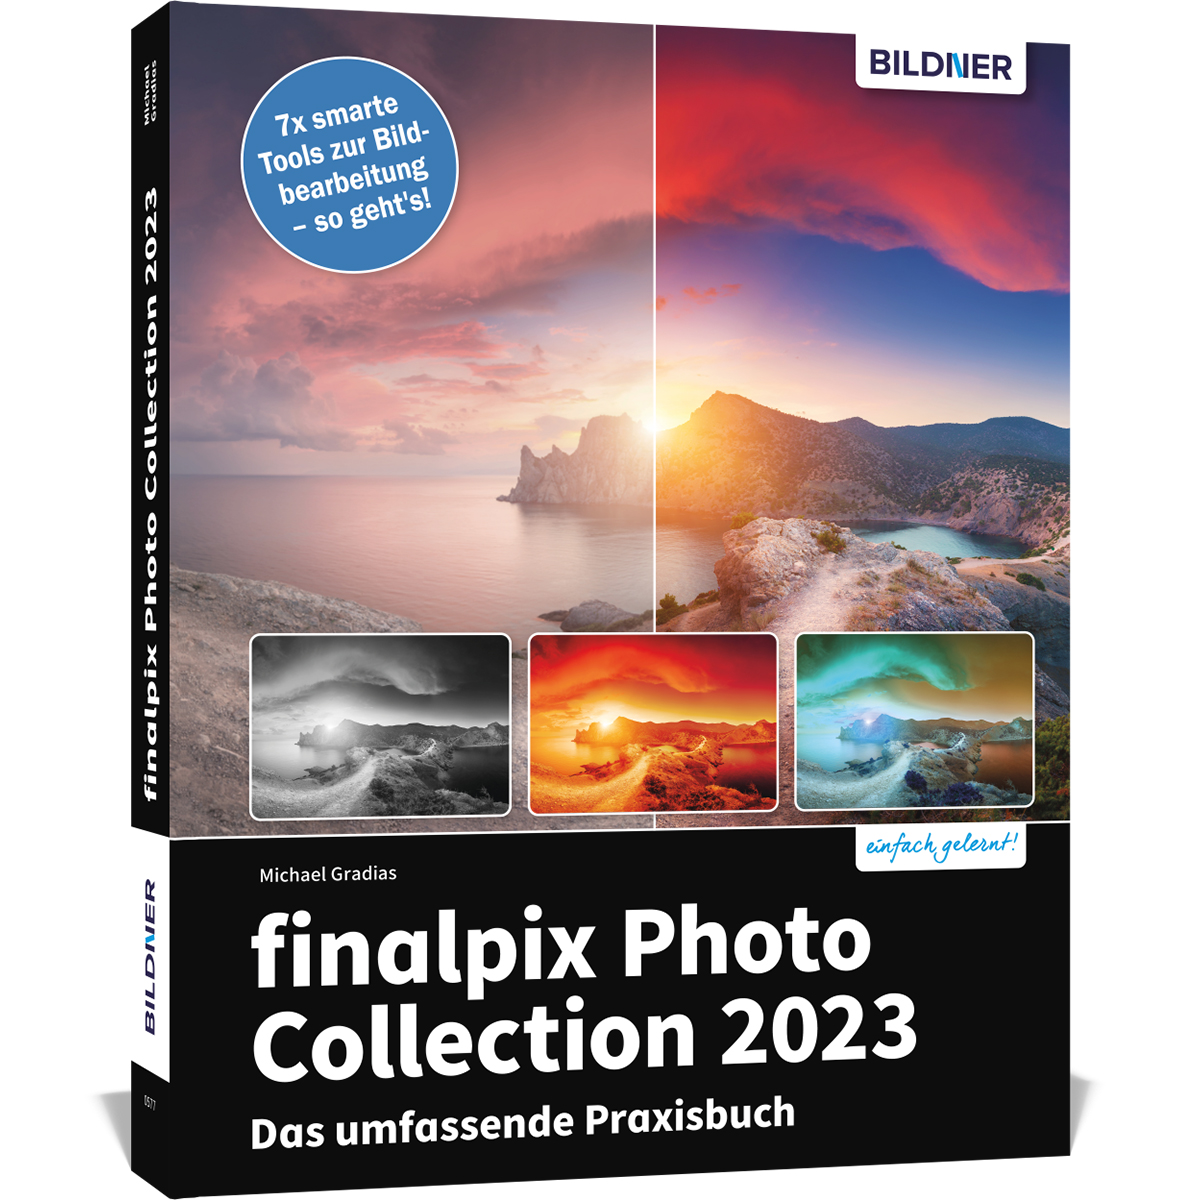 finalpix Das 2023 - Praxisbuch Bildbearbeitungstools zu smarten 7 den Photo Collection umfassende